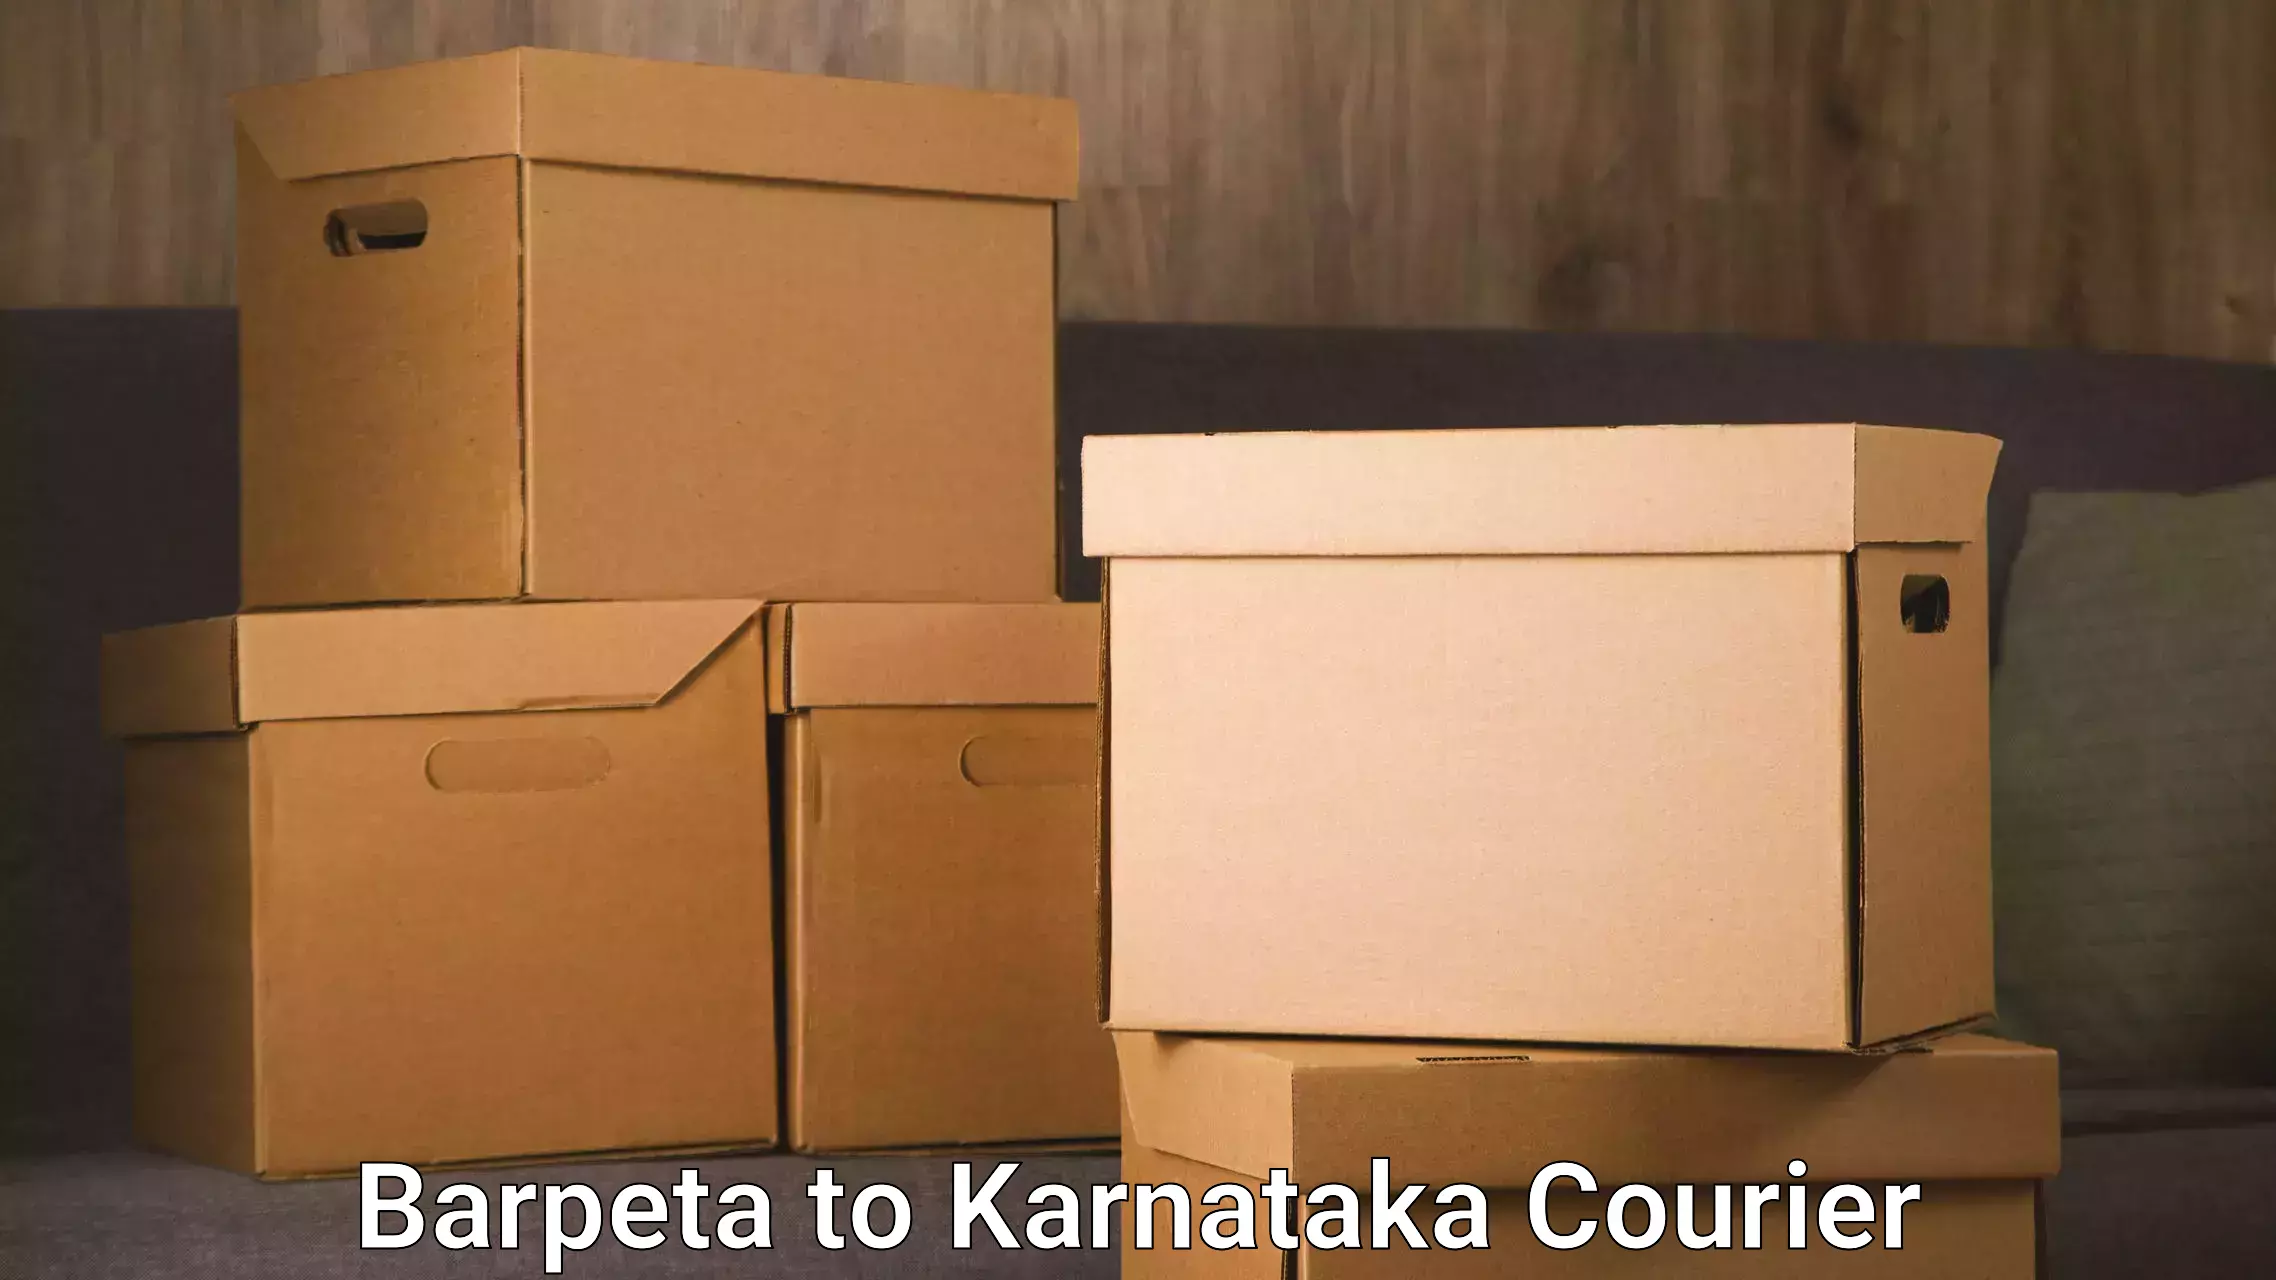 User-friendly courier app Barpeta to Karnataka